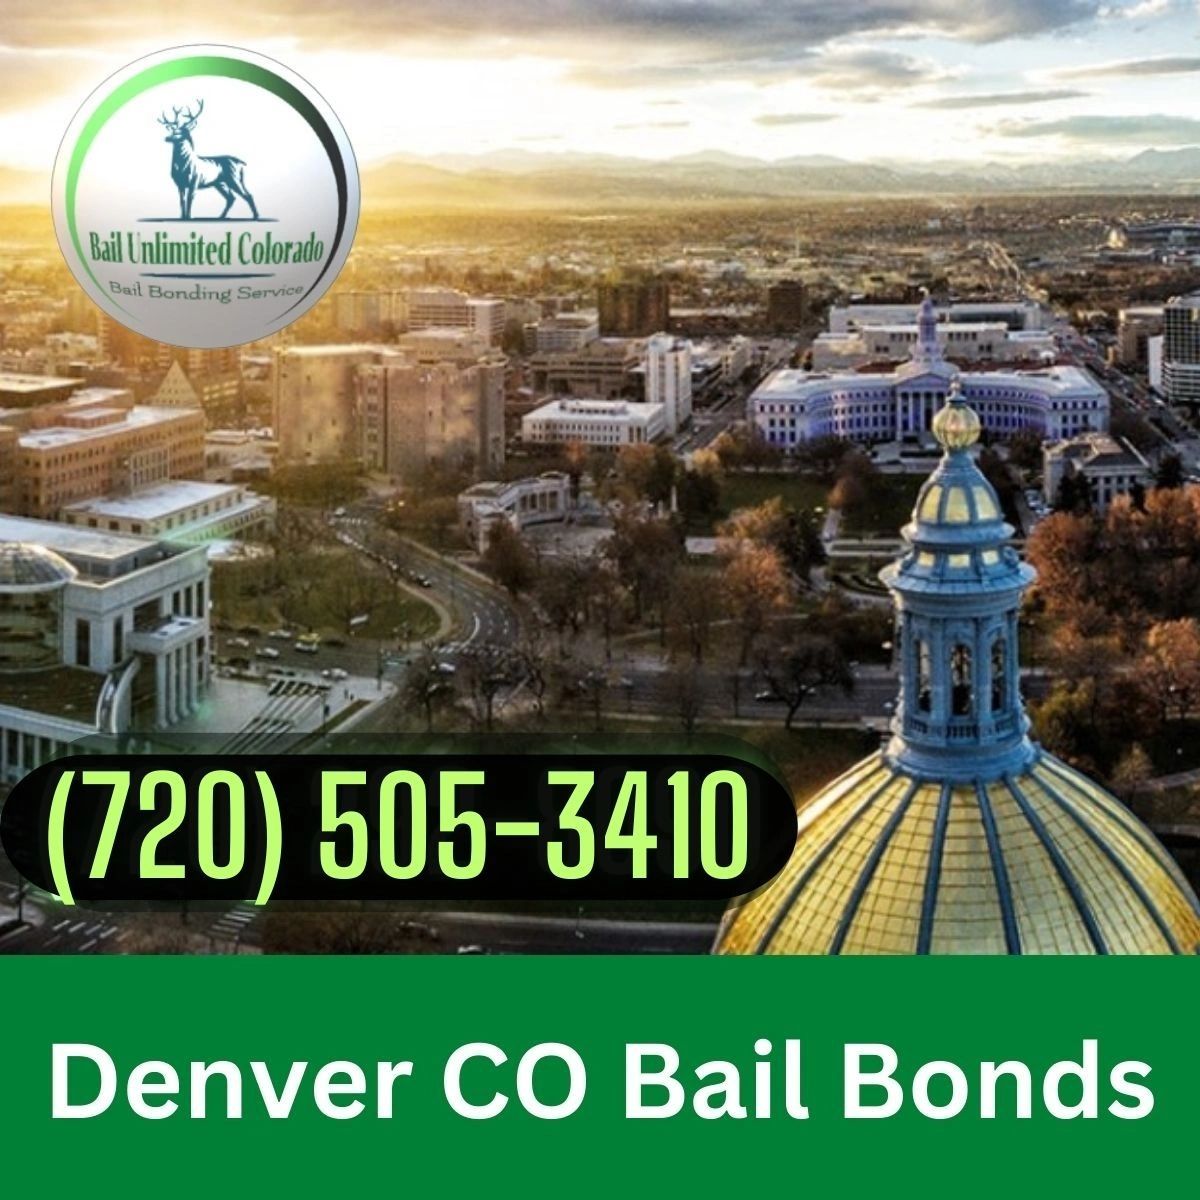 Denver CO Bail Bonds (720) 505-3410 Bail Unlimited Colorado LOGO Downtown Denver State Capital Gold